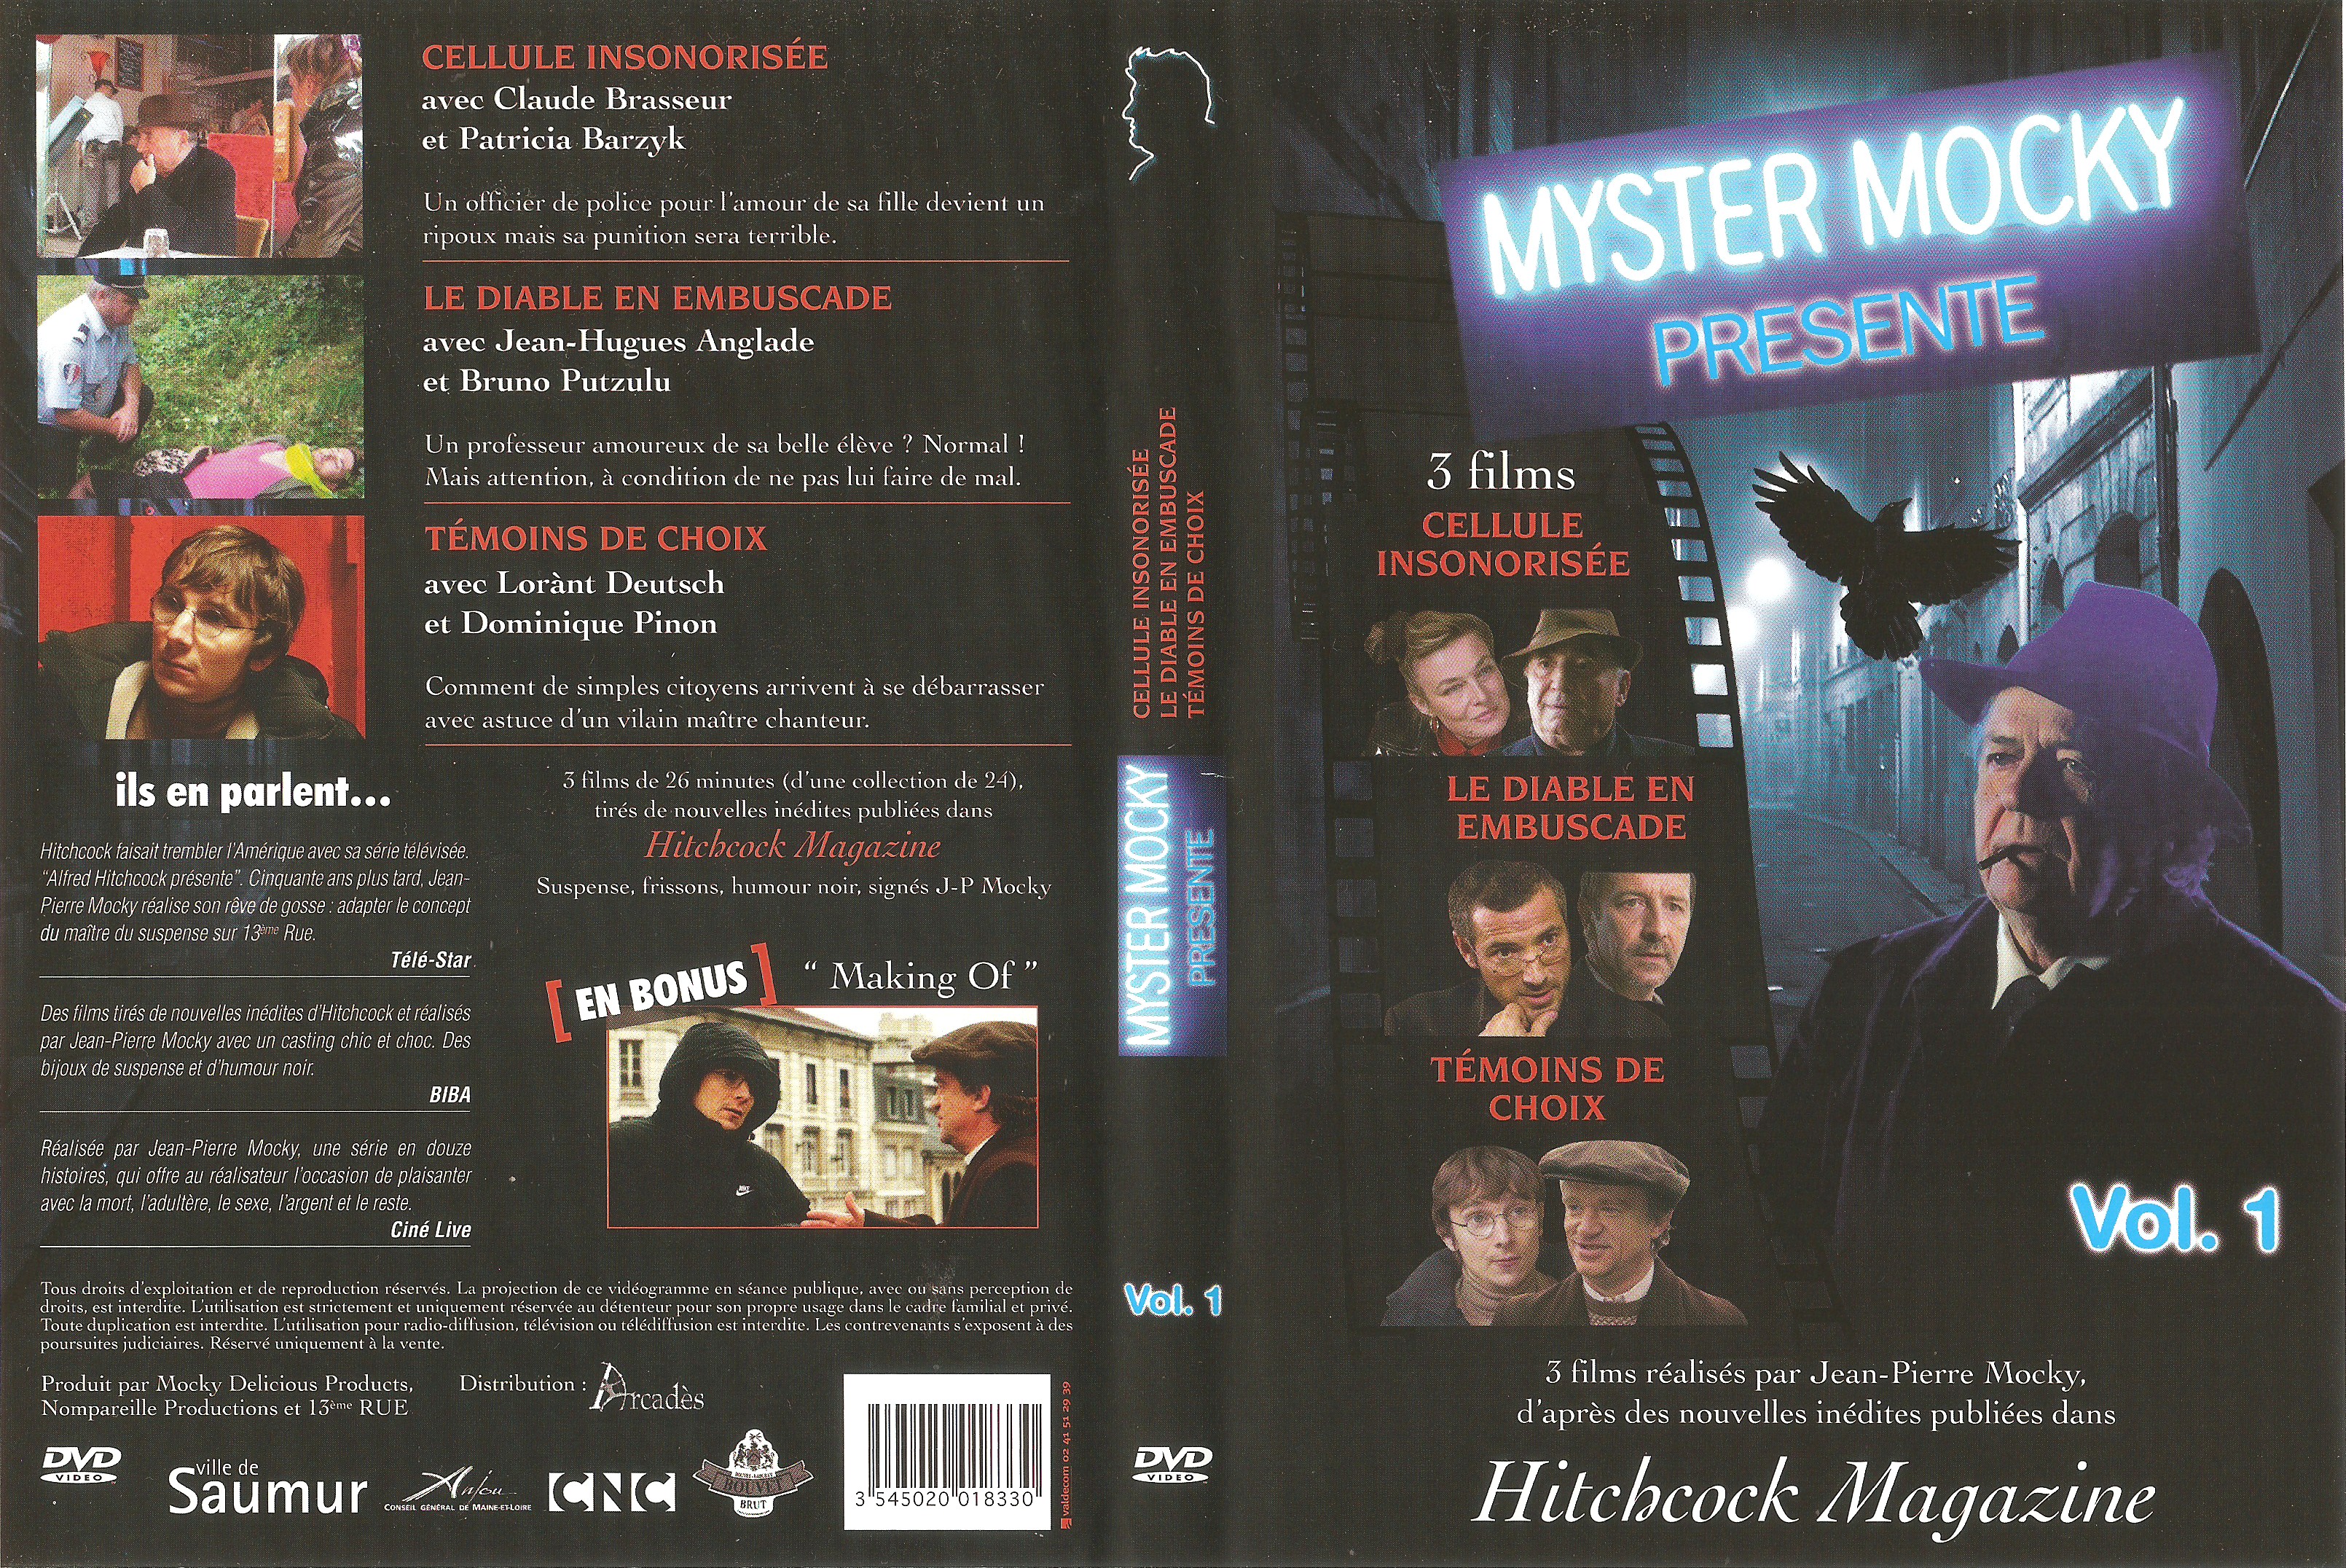 Jaquette DVD Myster Mocky prsente Vol 01